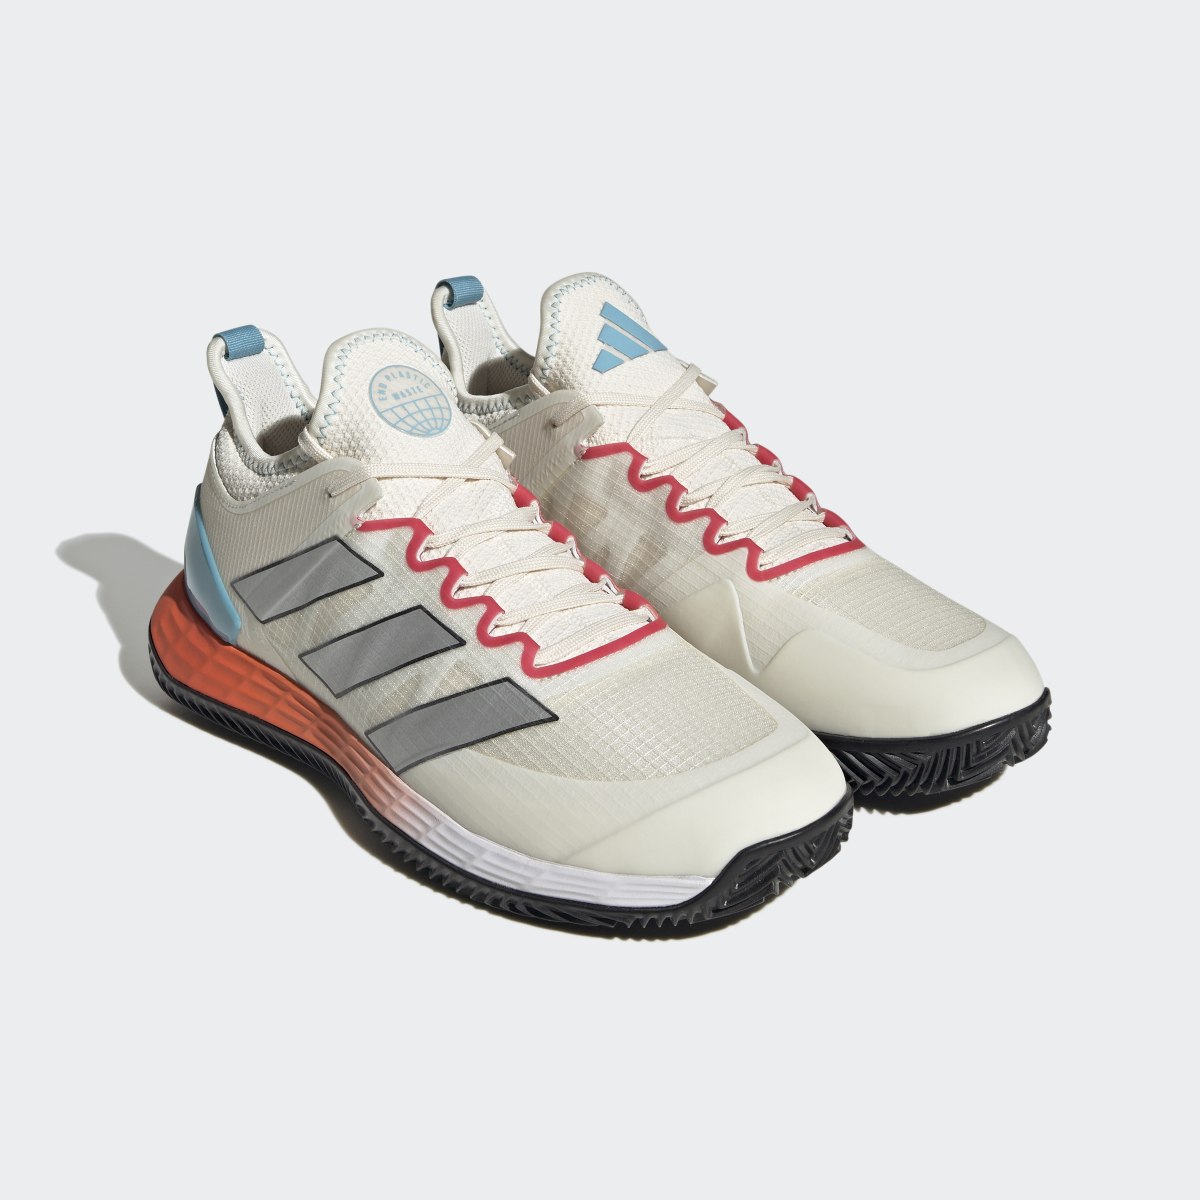 Adidas adizero Ubersonic 4 Clay Court Tennis Shoes. 8